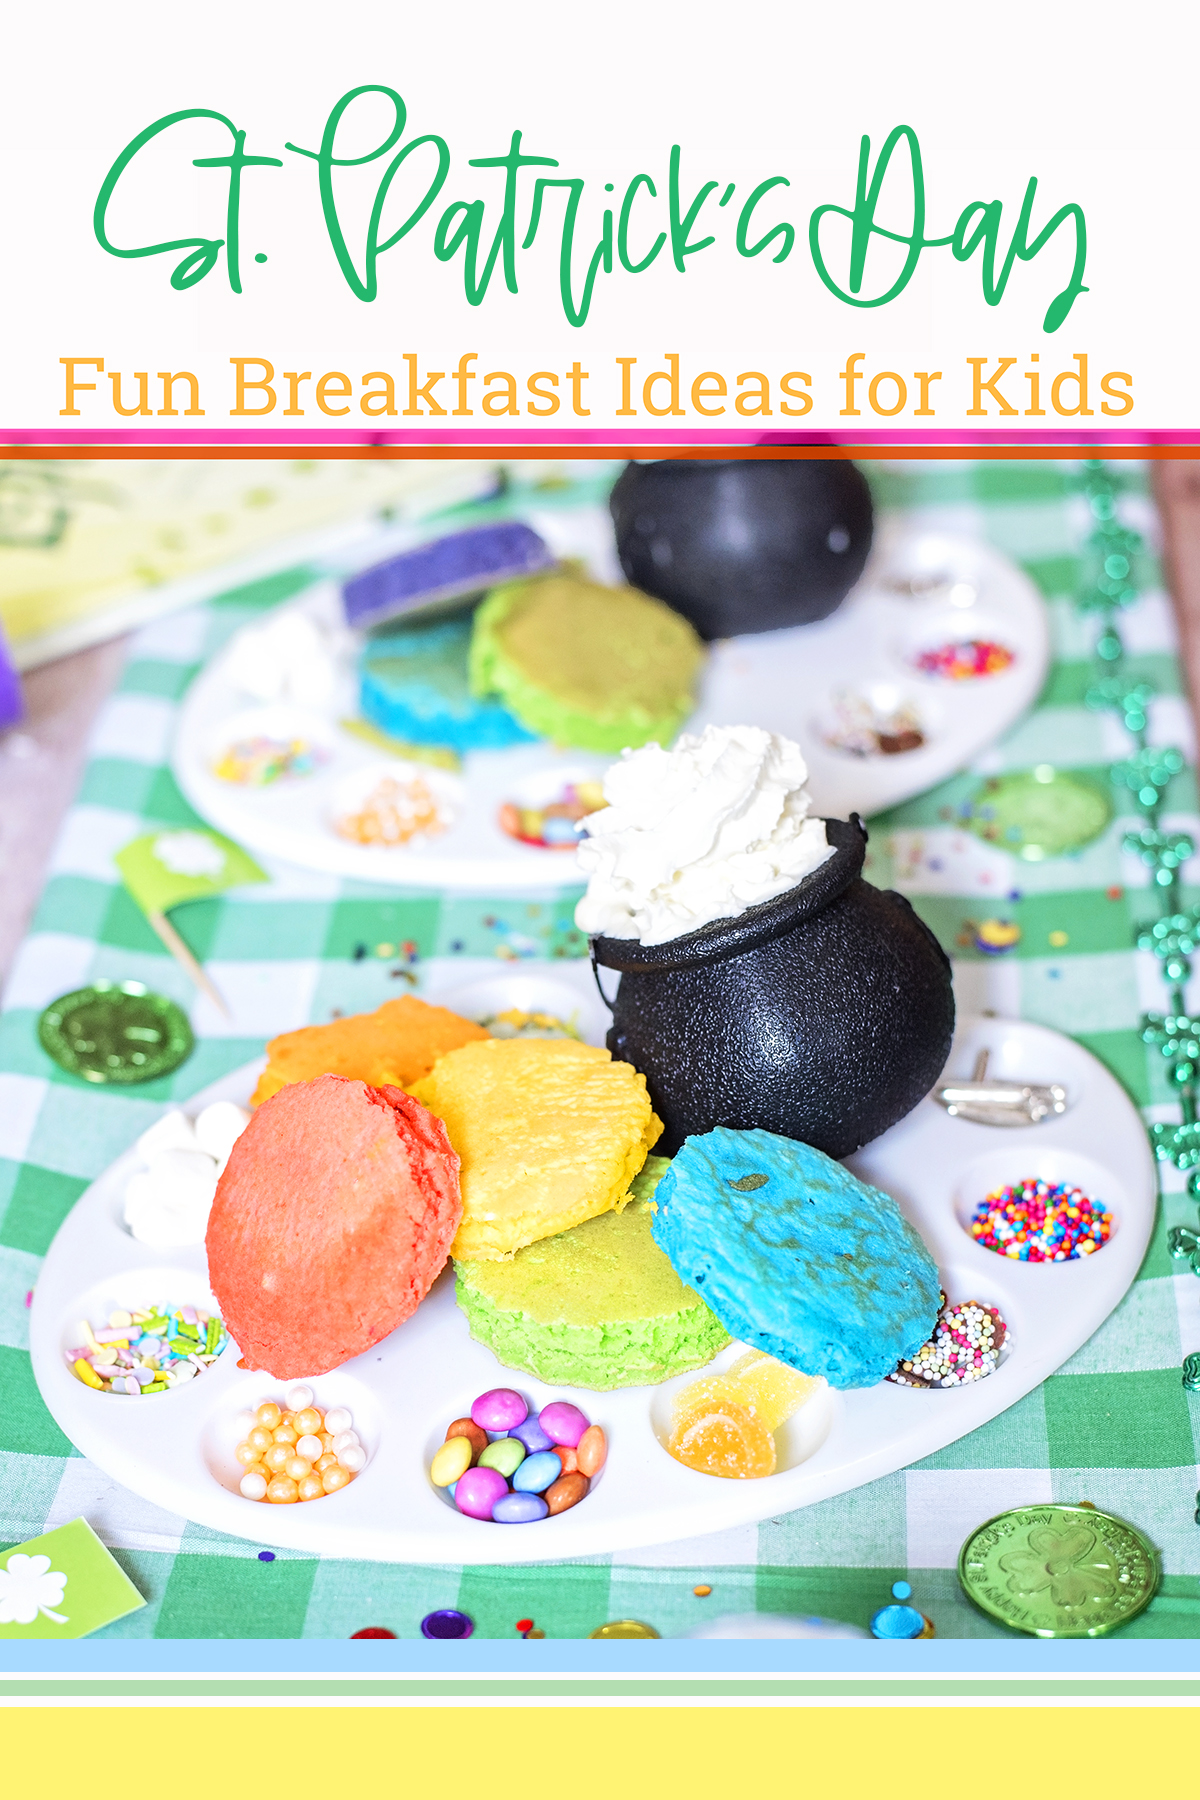 St. Patrick's Day Fun Breakfast Ideas for Kids